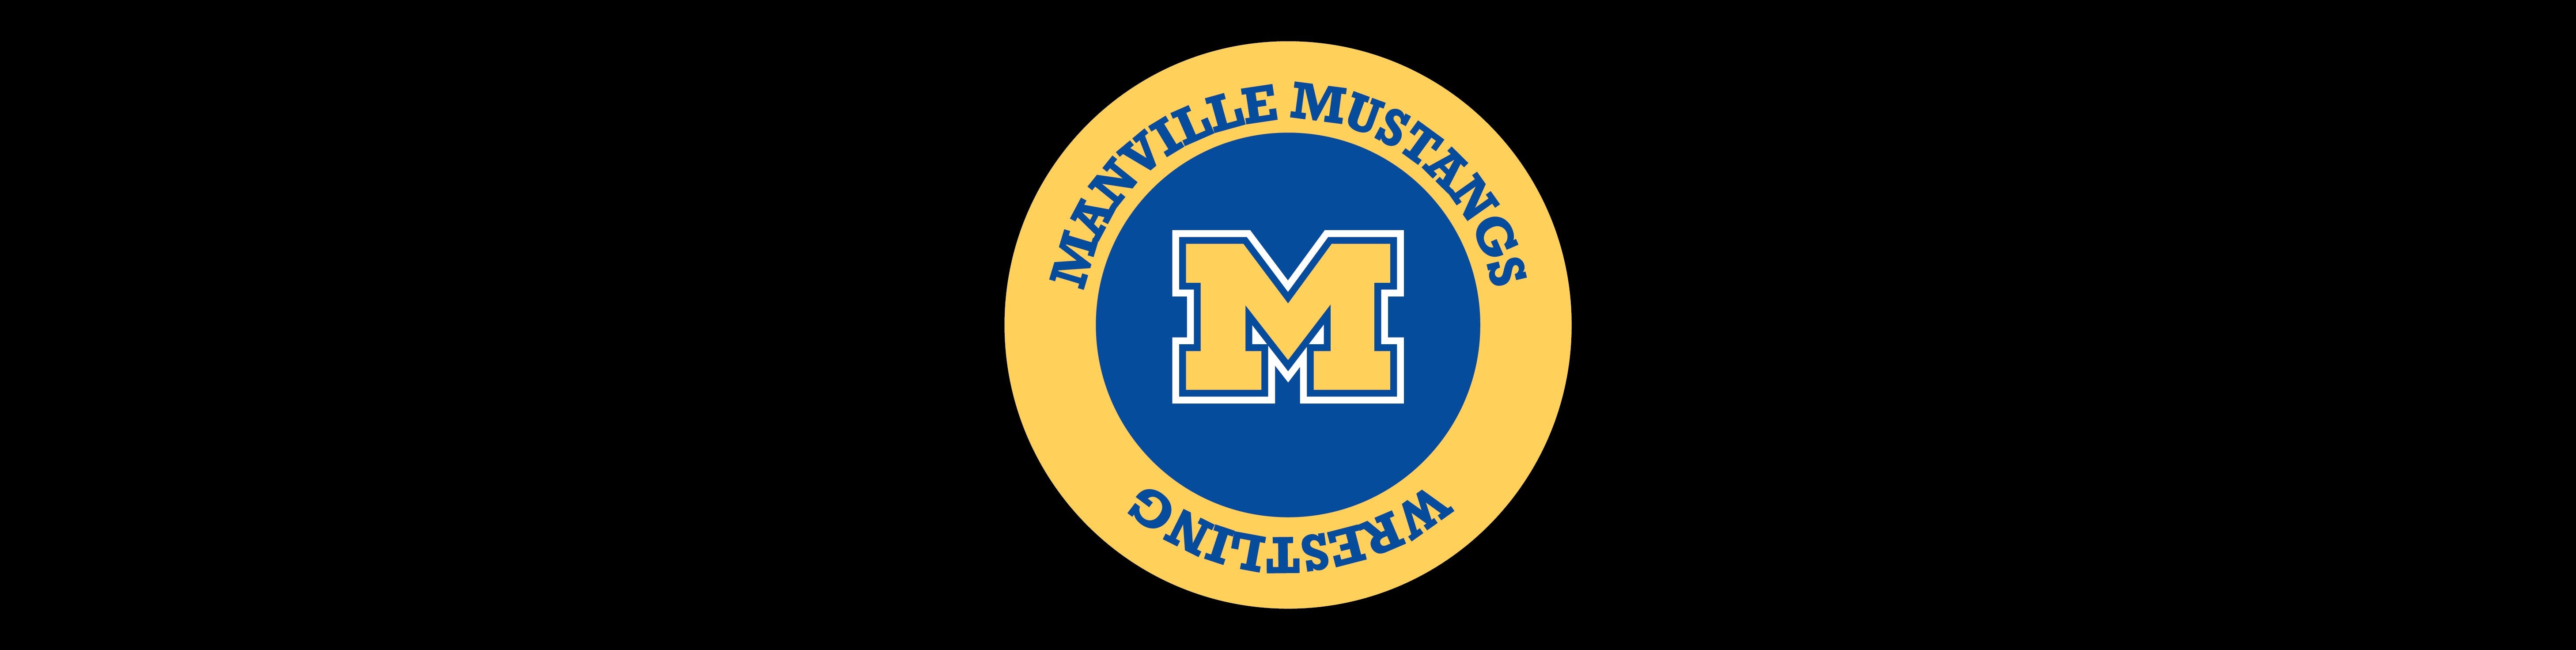 Manville Mustangs Wrestling